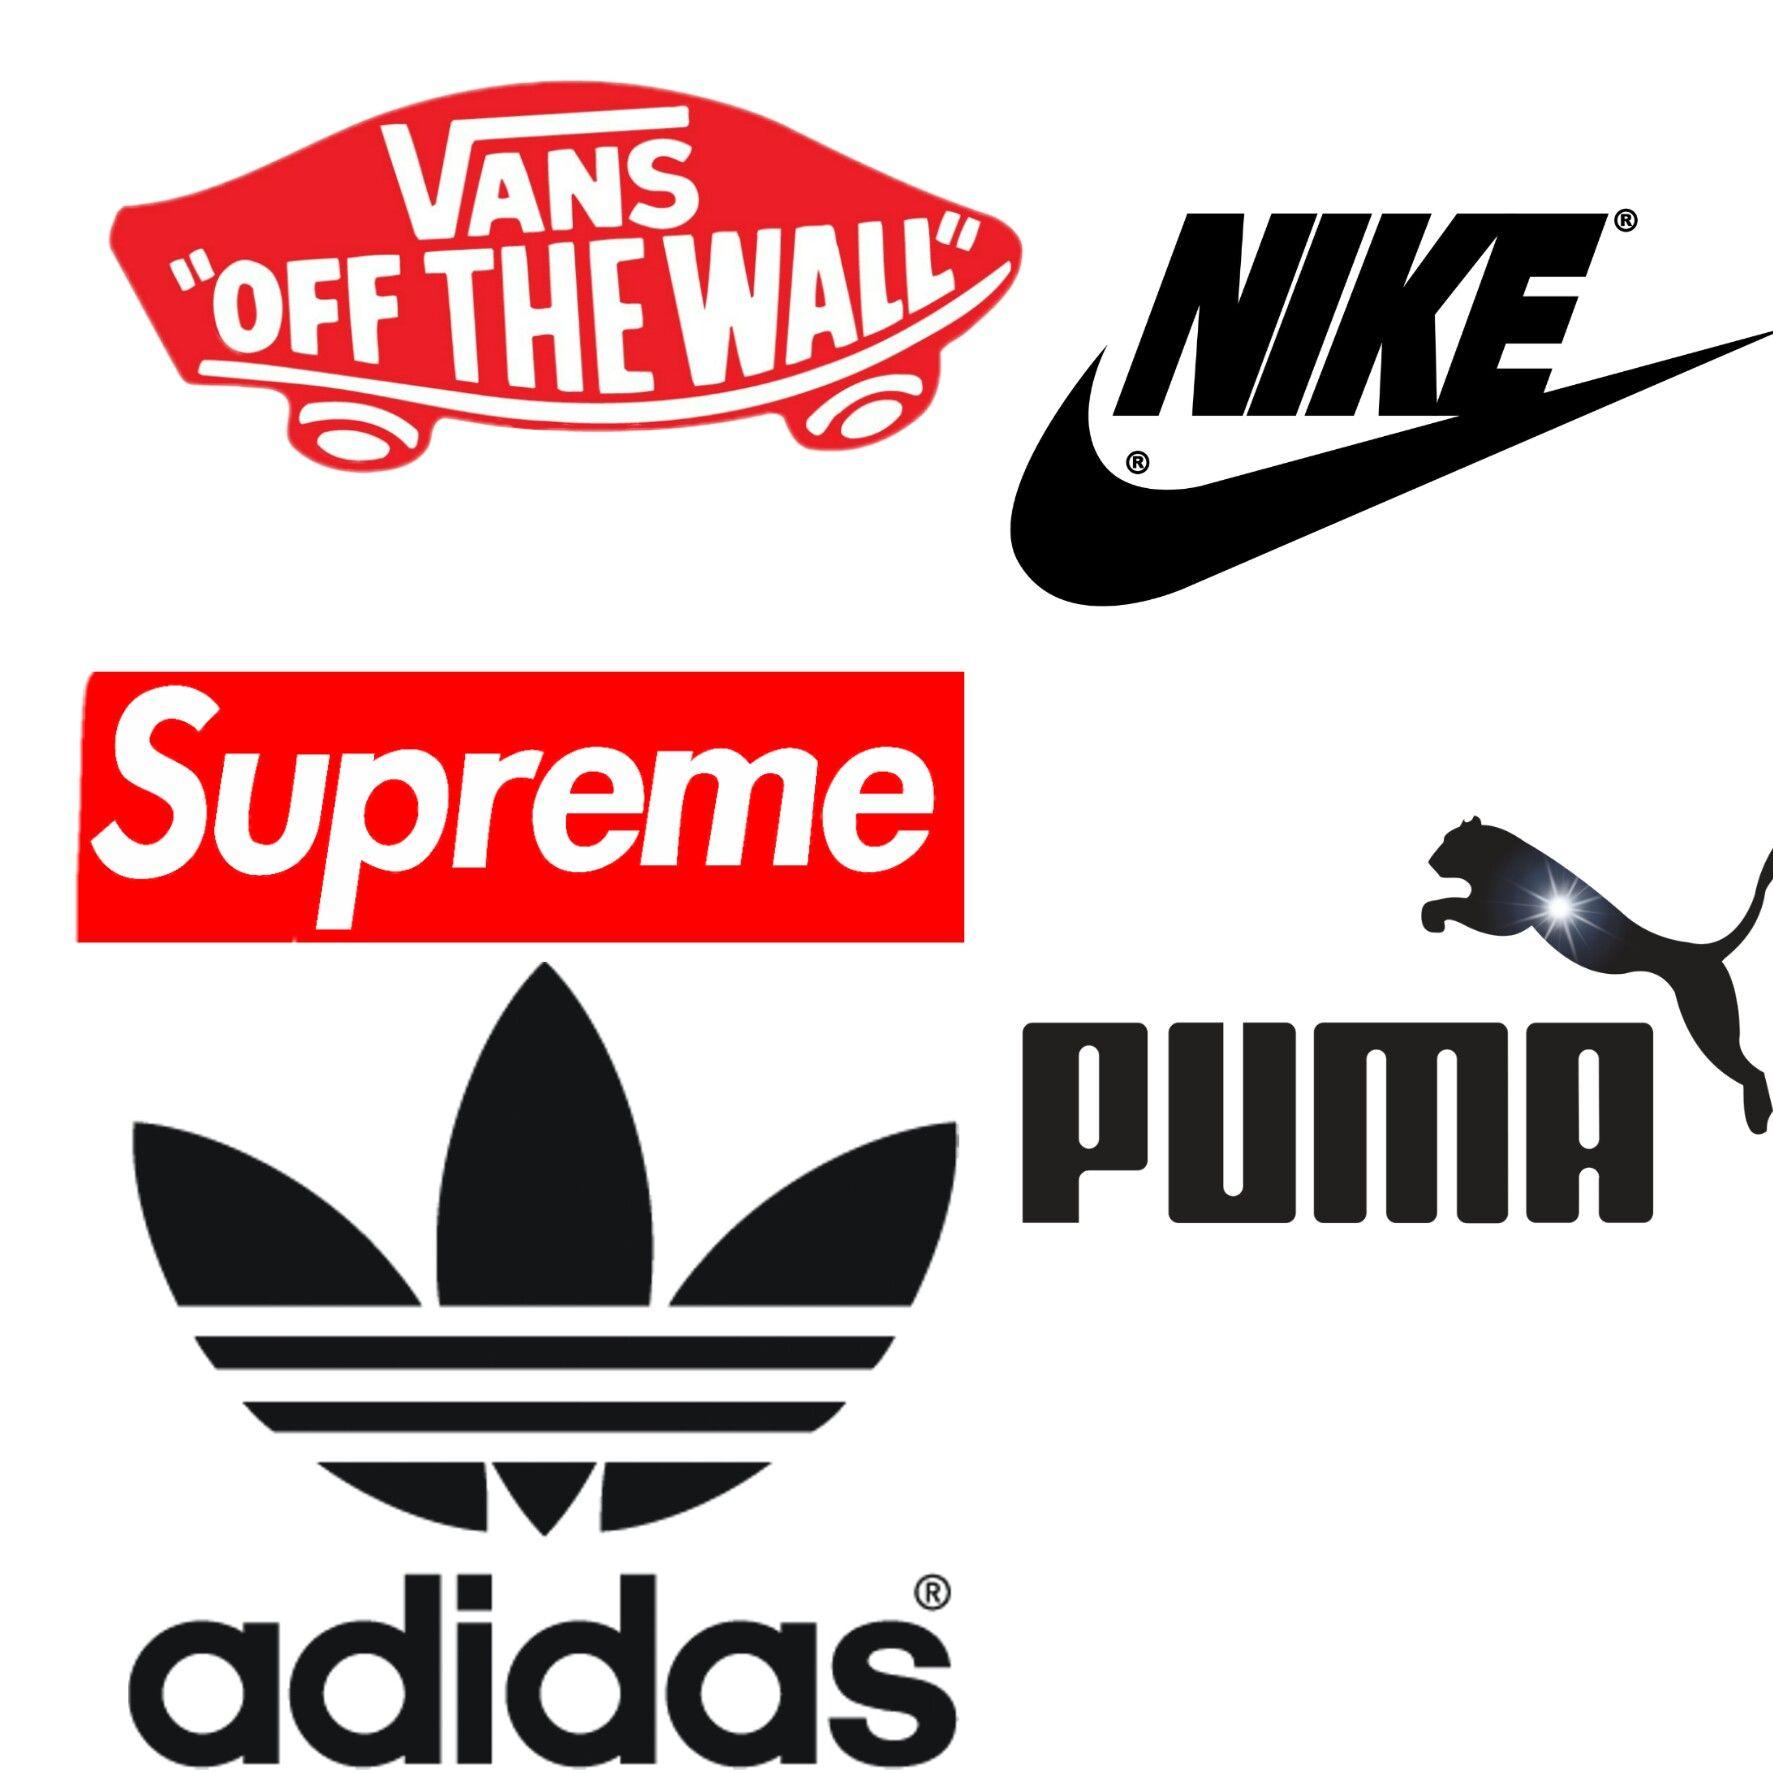 Supreme Adidas Logo - vansnikepumasupremeadidas - Image by laura12952